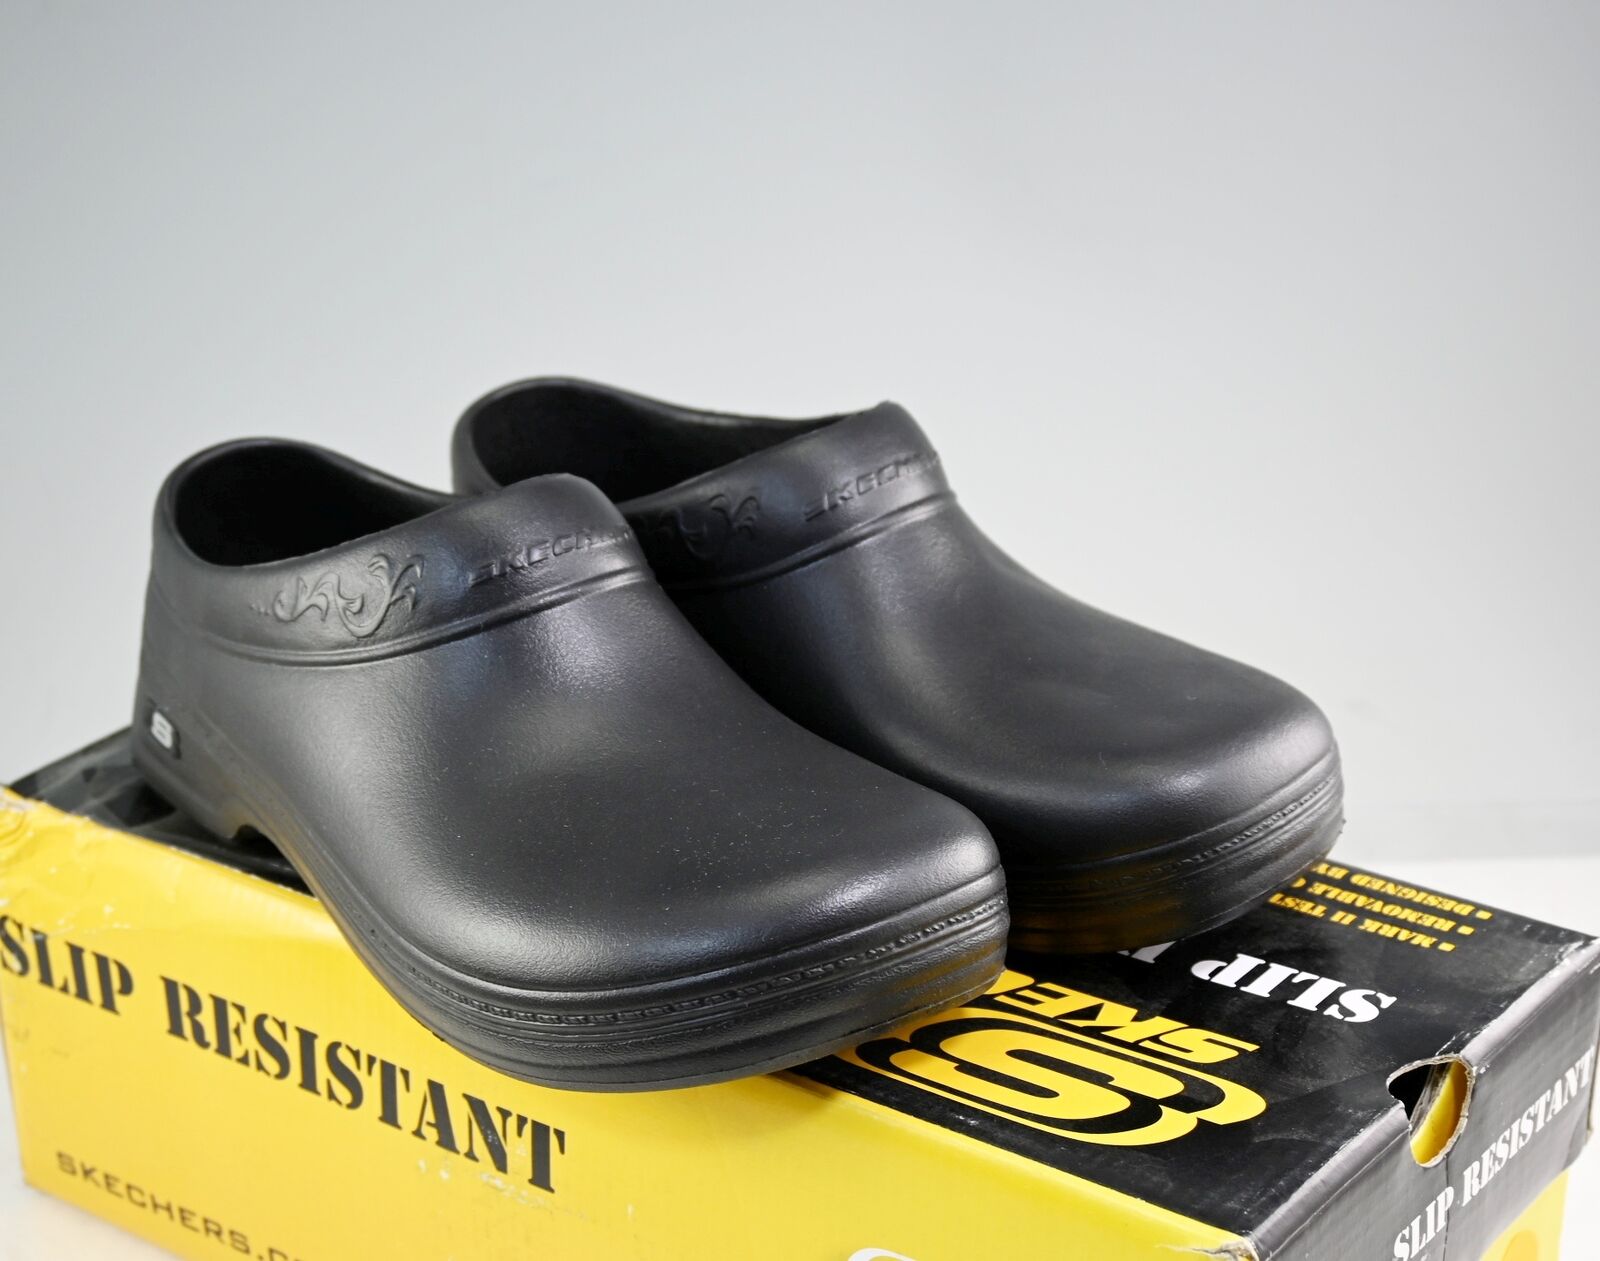 Skechers Clara Shoes Slip Resistant Sole Women's 76381 New in Box See List SKECHERS